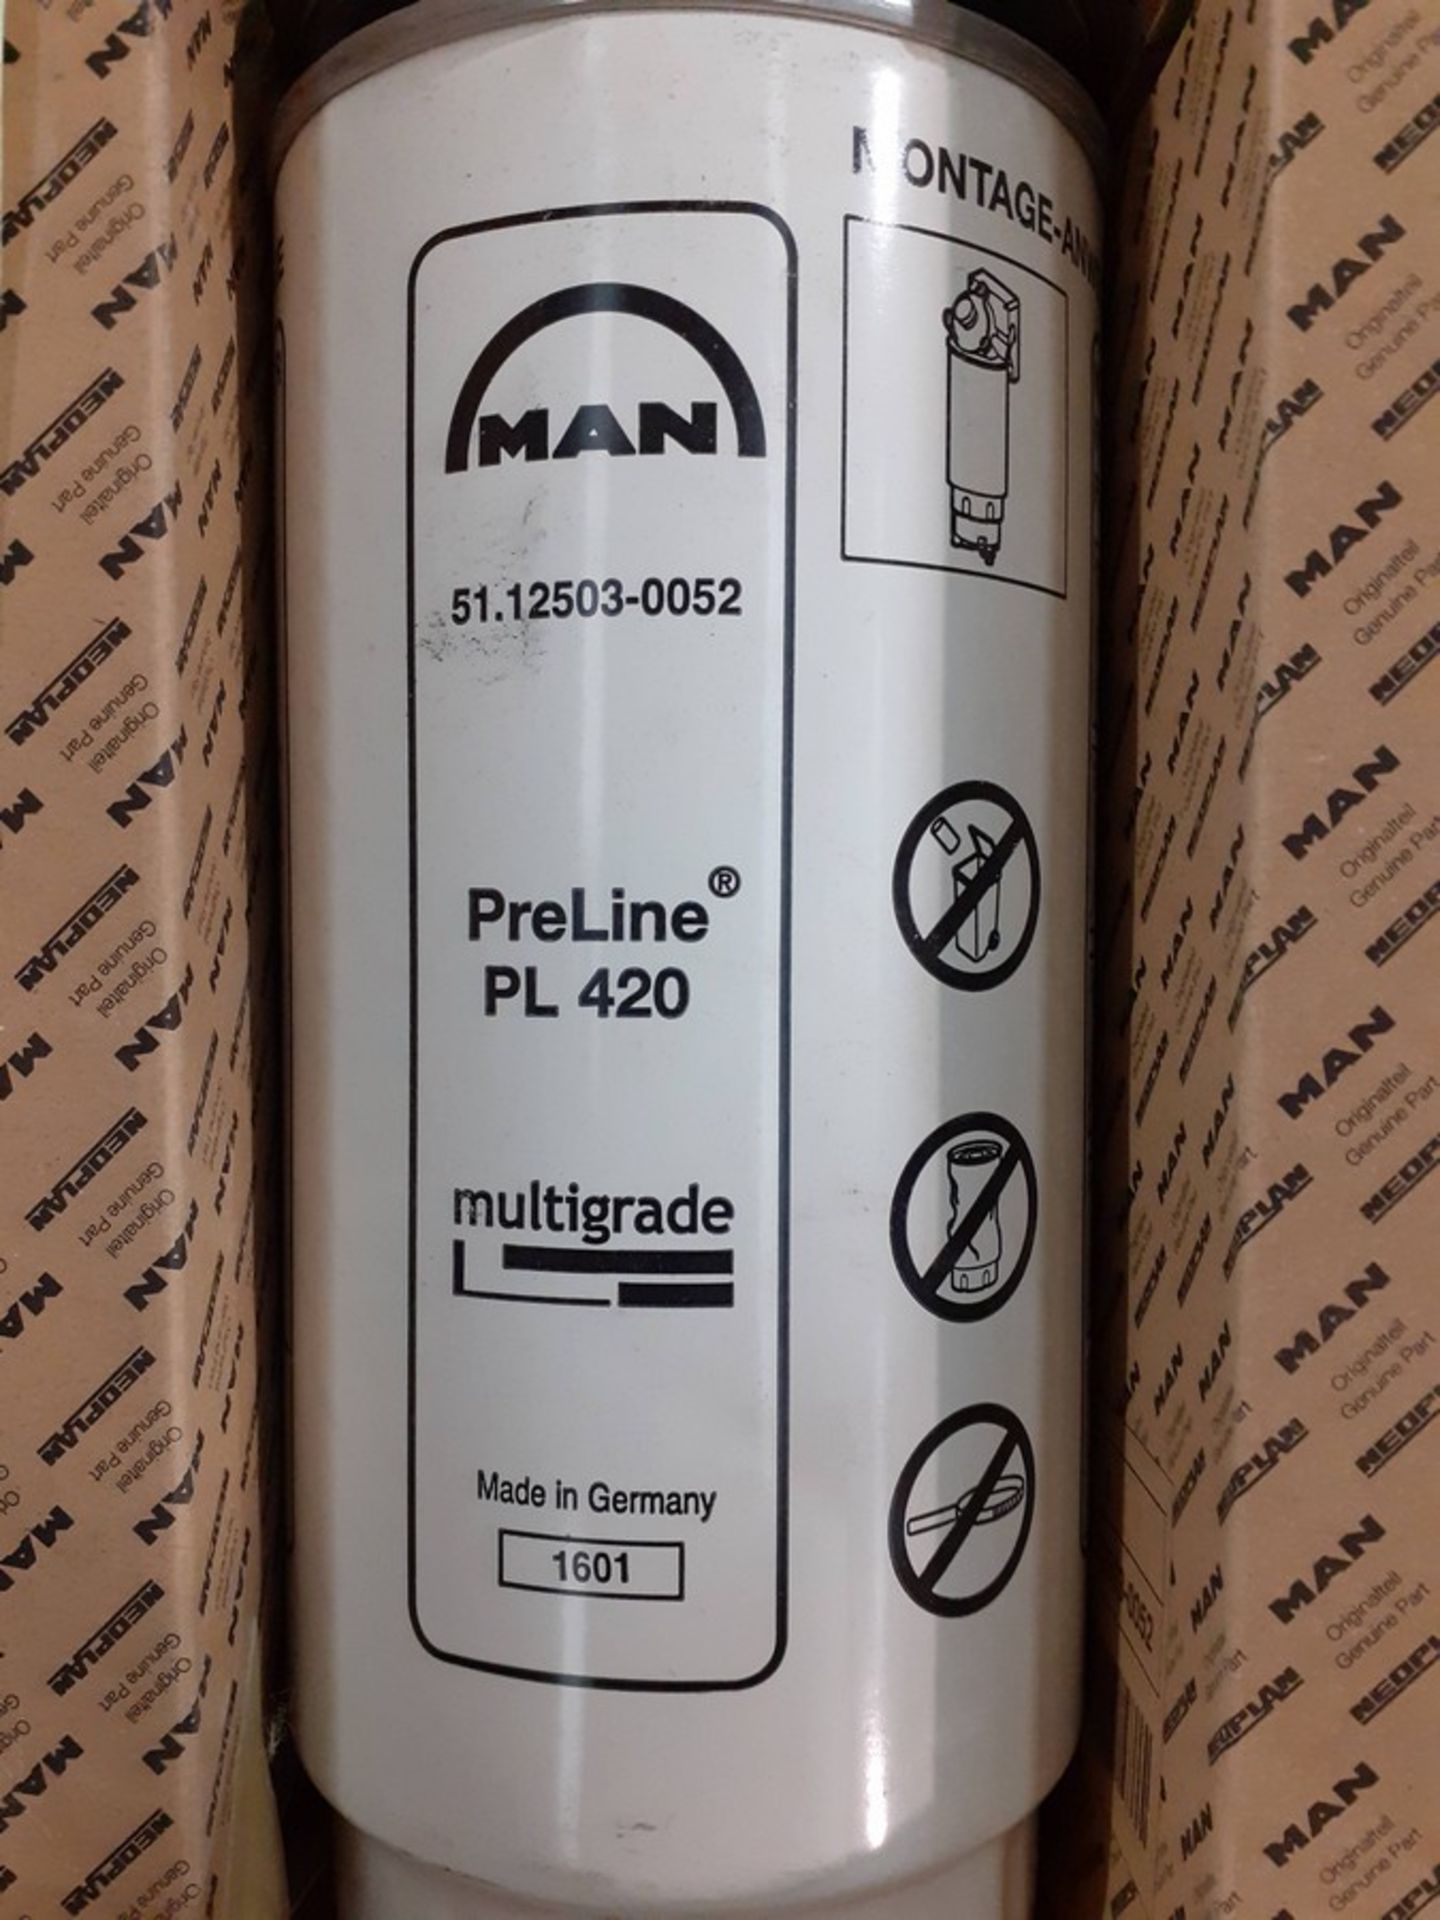 Mann fuel filter preline 4200 - 51.12503-0052 x 12 - Image 2 of 6